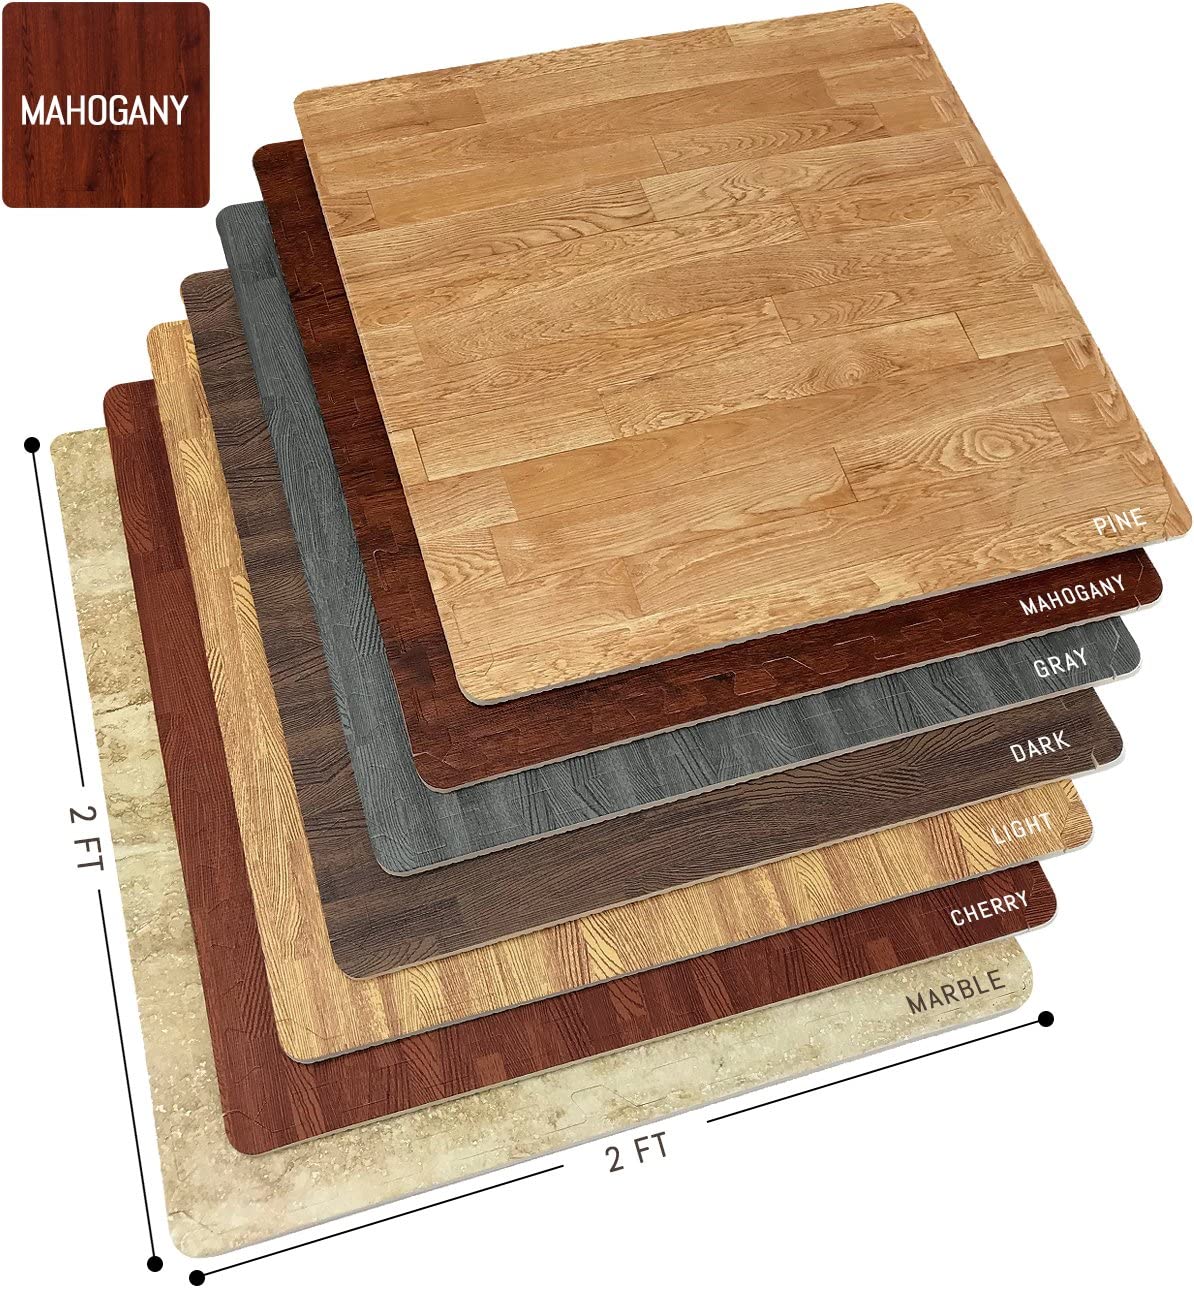 Sorbus Wood Grain Floor Mats Foam Interlocking Mats Tile 3/8-Inch Thick Flooring Wood Mat Tiles Borders - Home Office Playroom Basement Trade Show